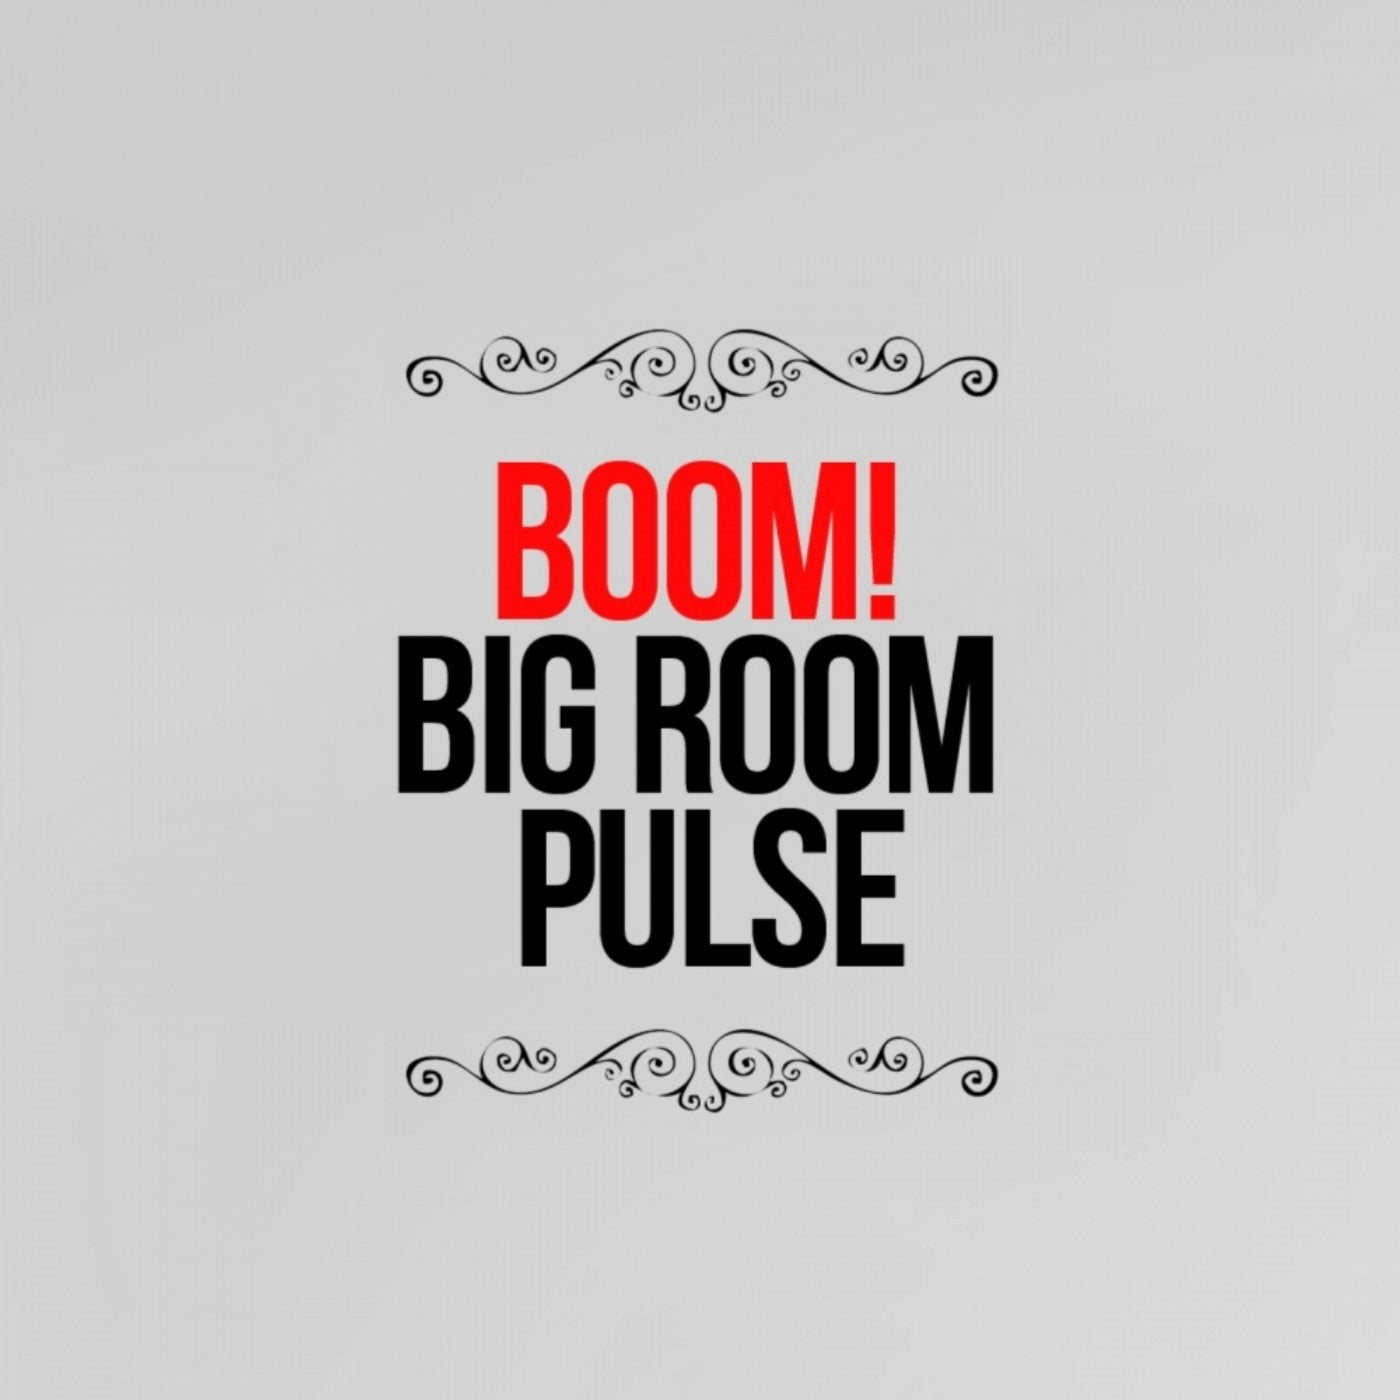 Boom! Big Room Pulse